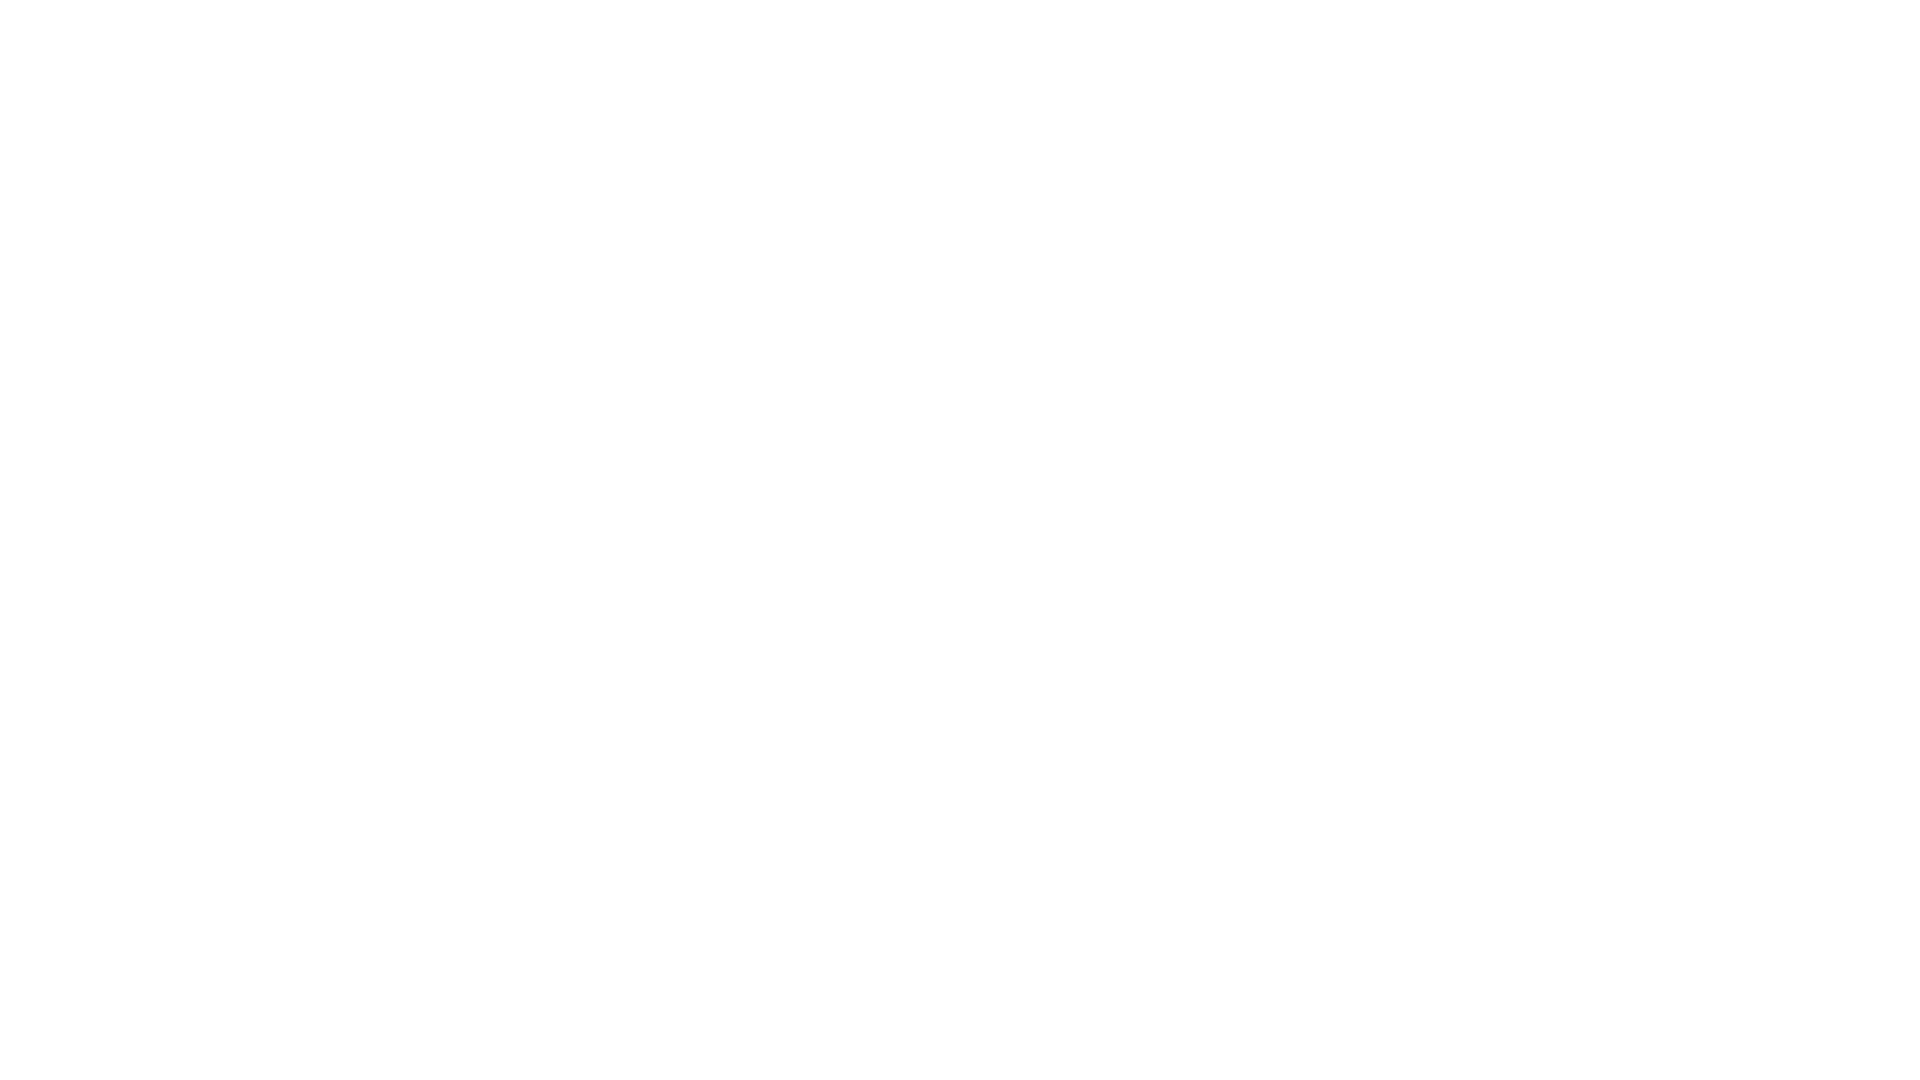 BlackBear Fulfillment logo gif